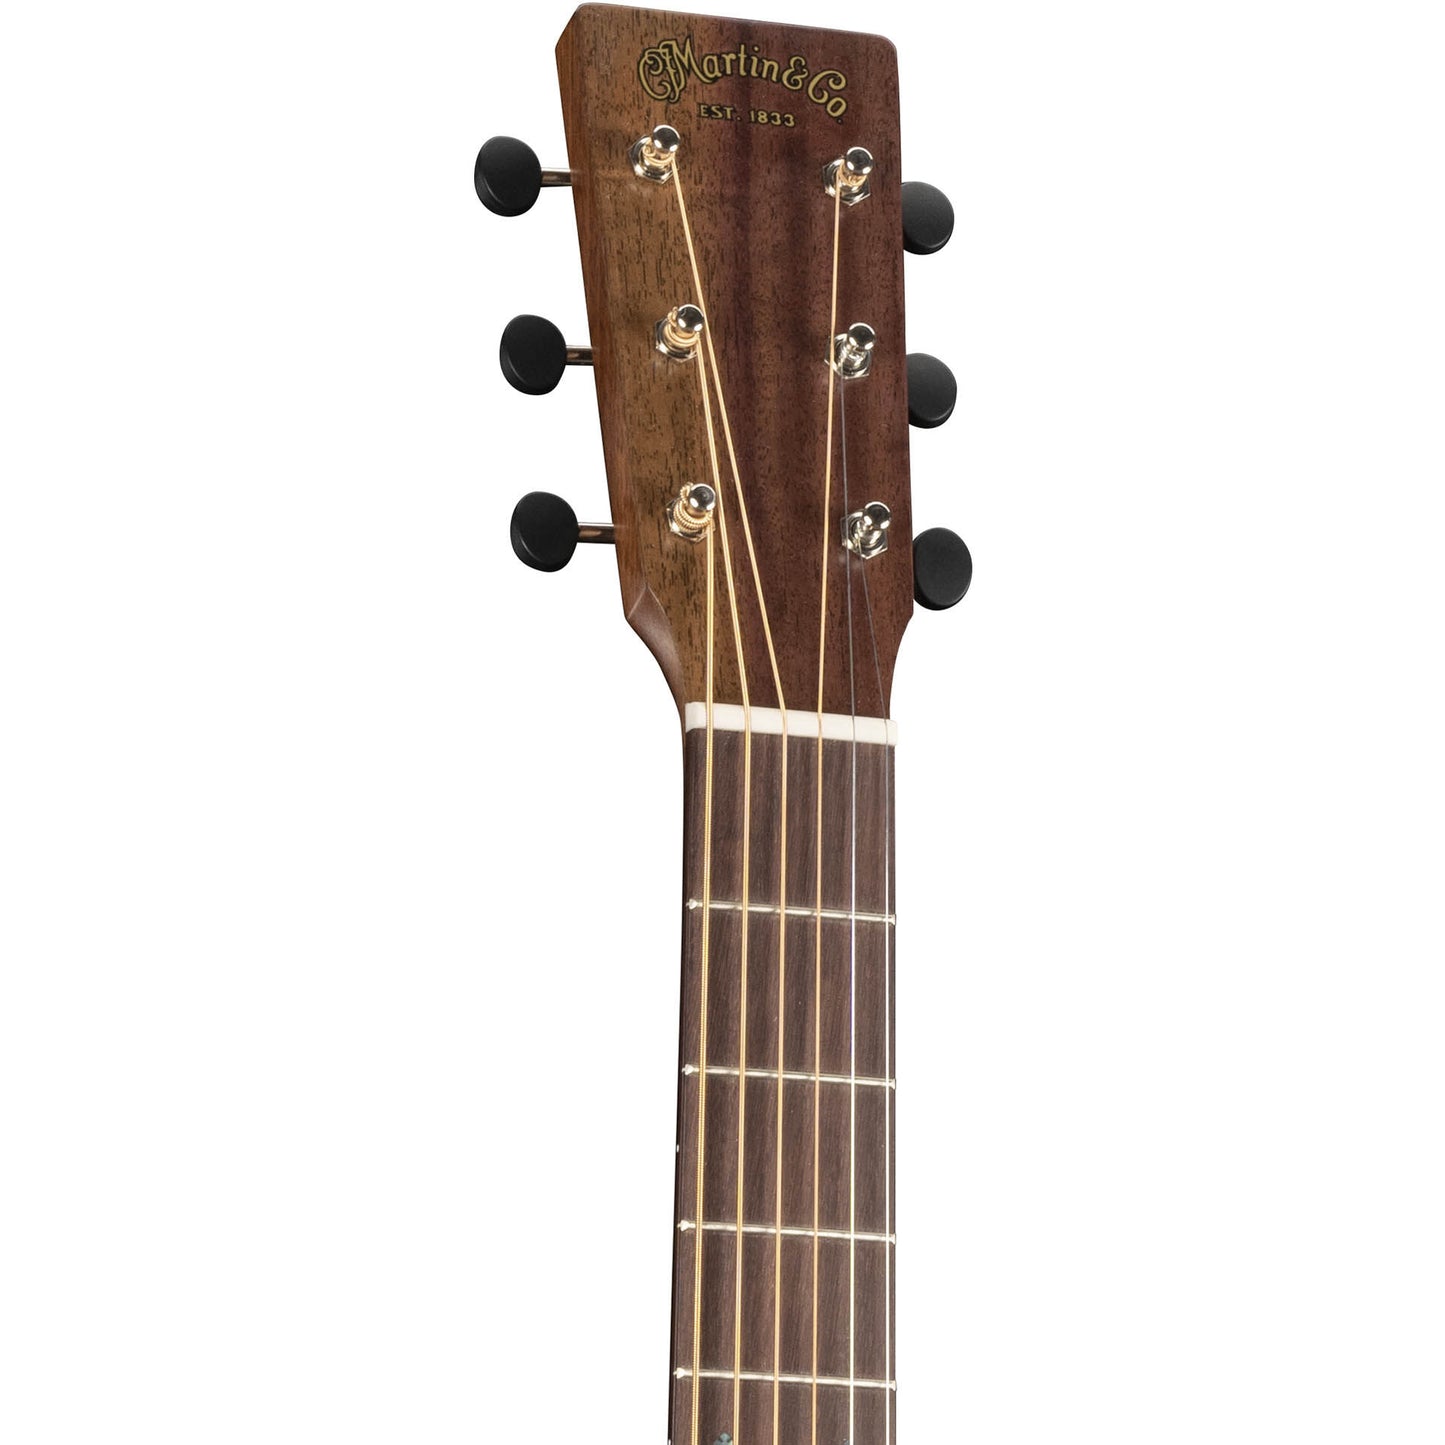 Martin D-15E 6 String Acoustic Electric Guitar - Mahogany Top